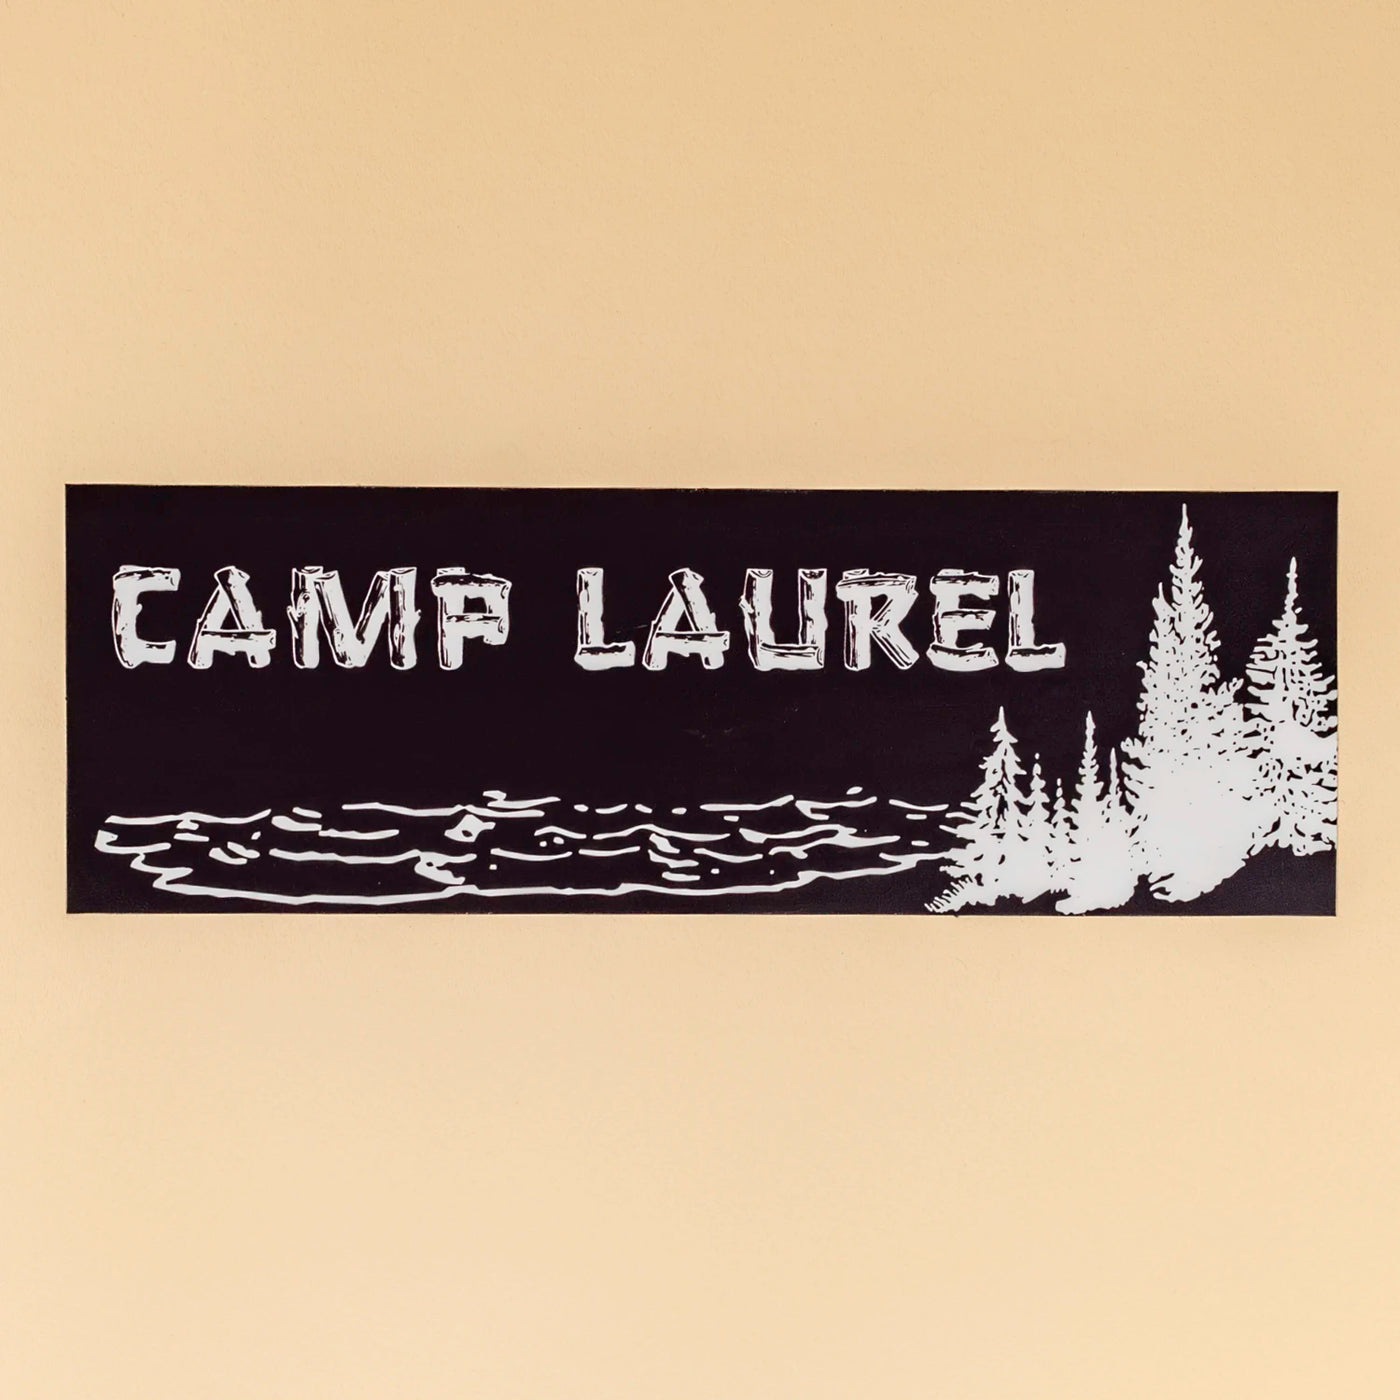 Camp Laurel Bumper Sticker